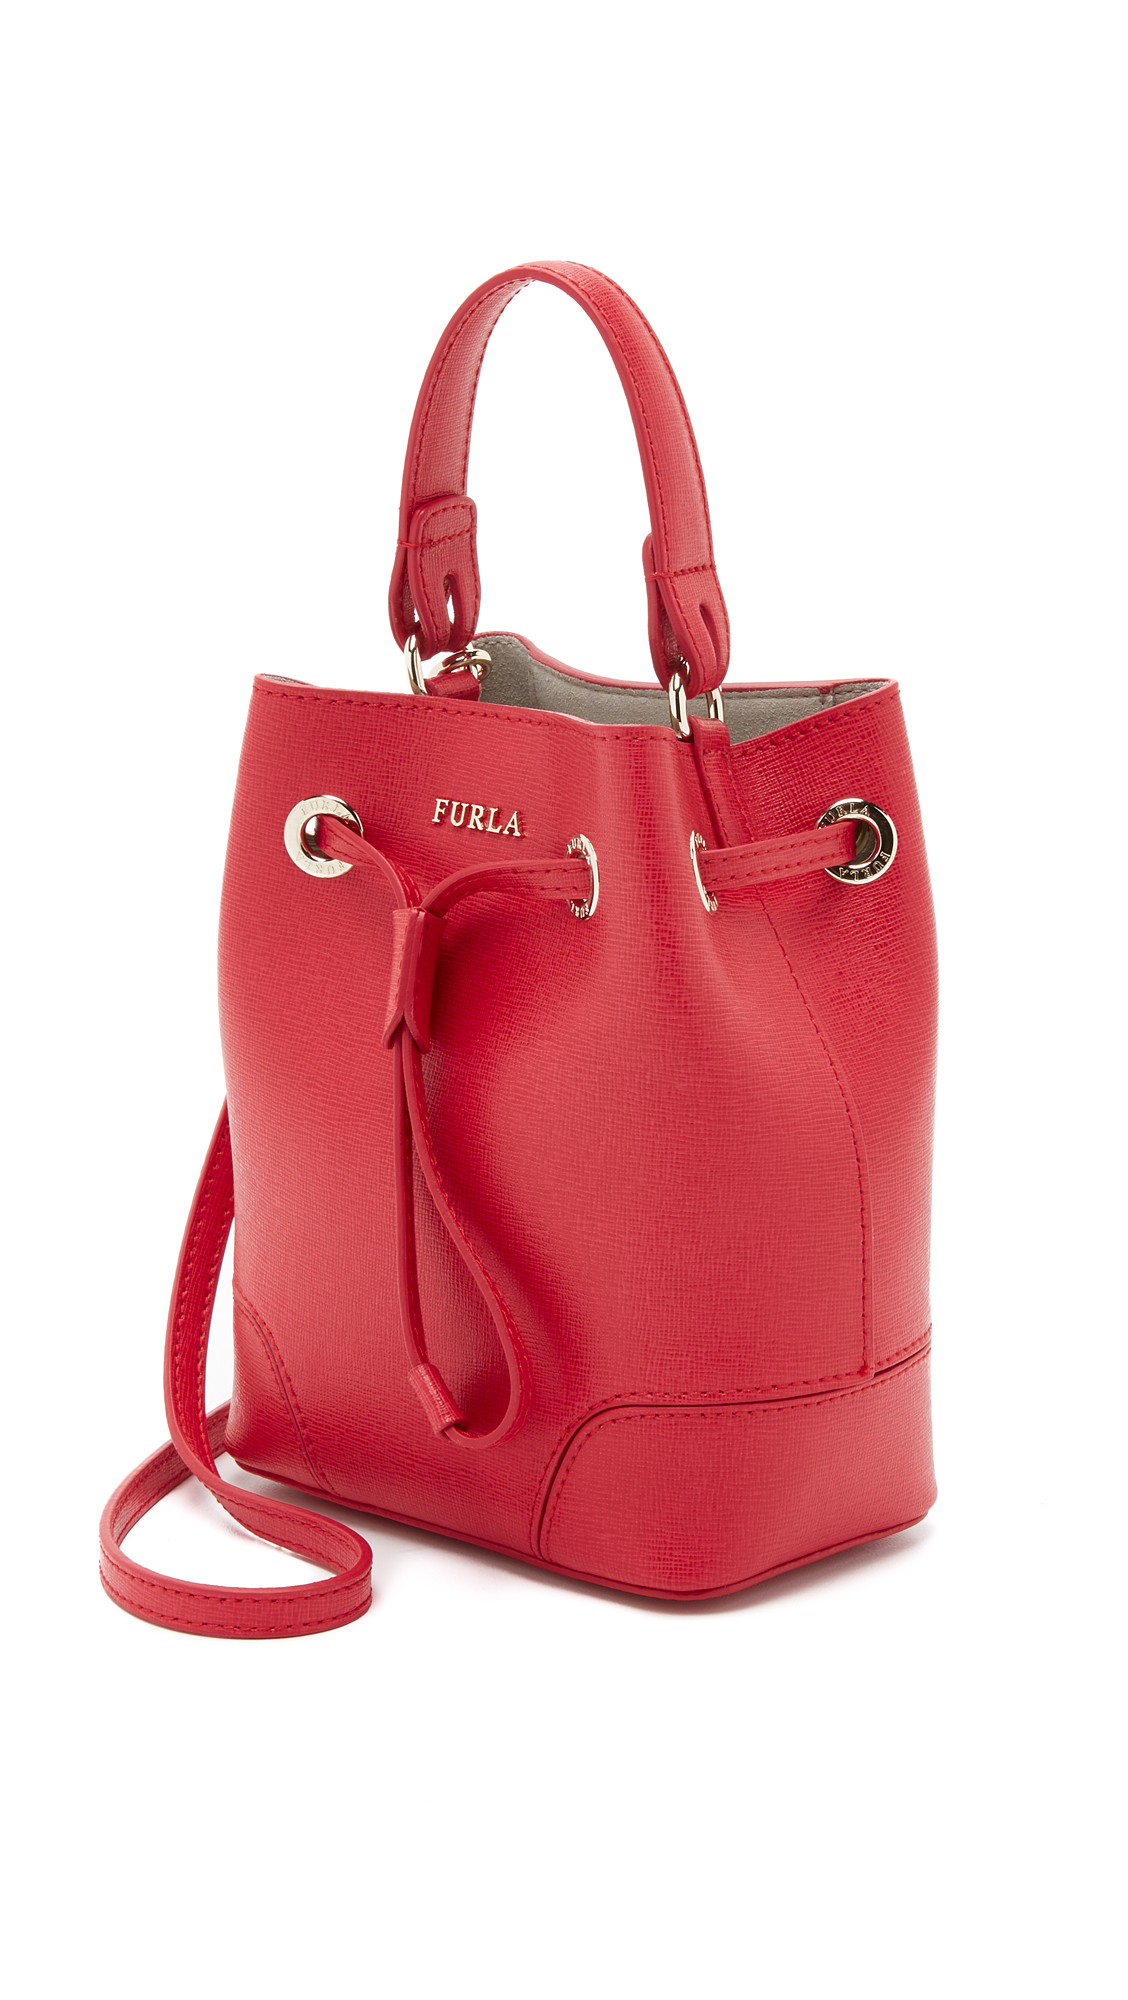 Furla Stacy Mini Drawstring Bucket Bag in Ruby (Red) - Lyst